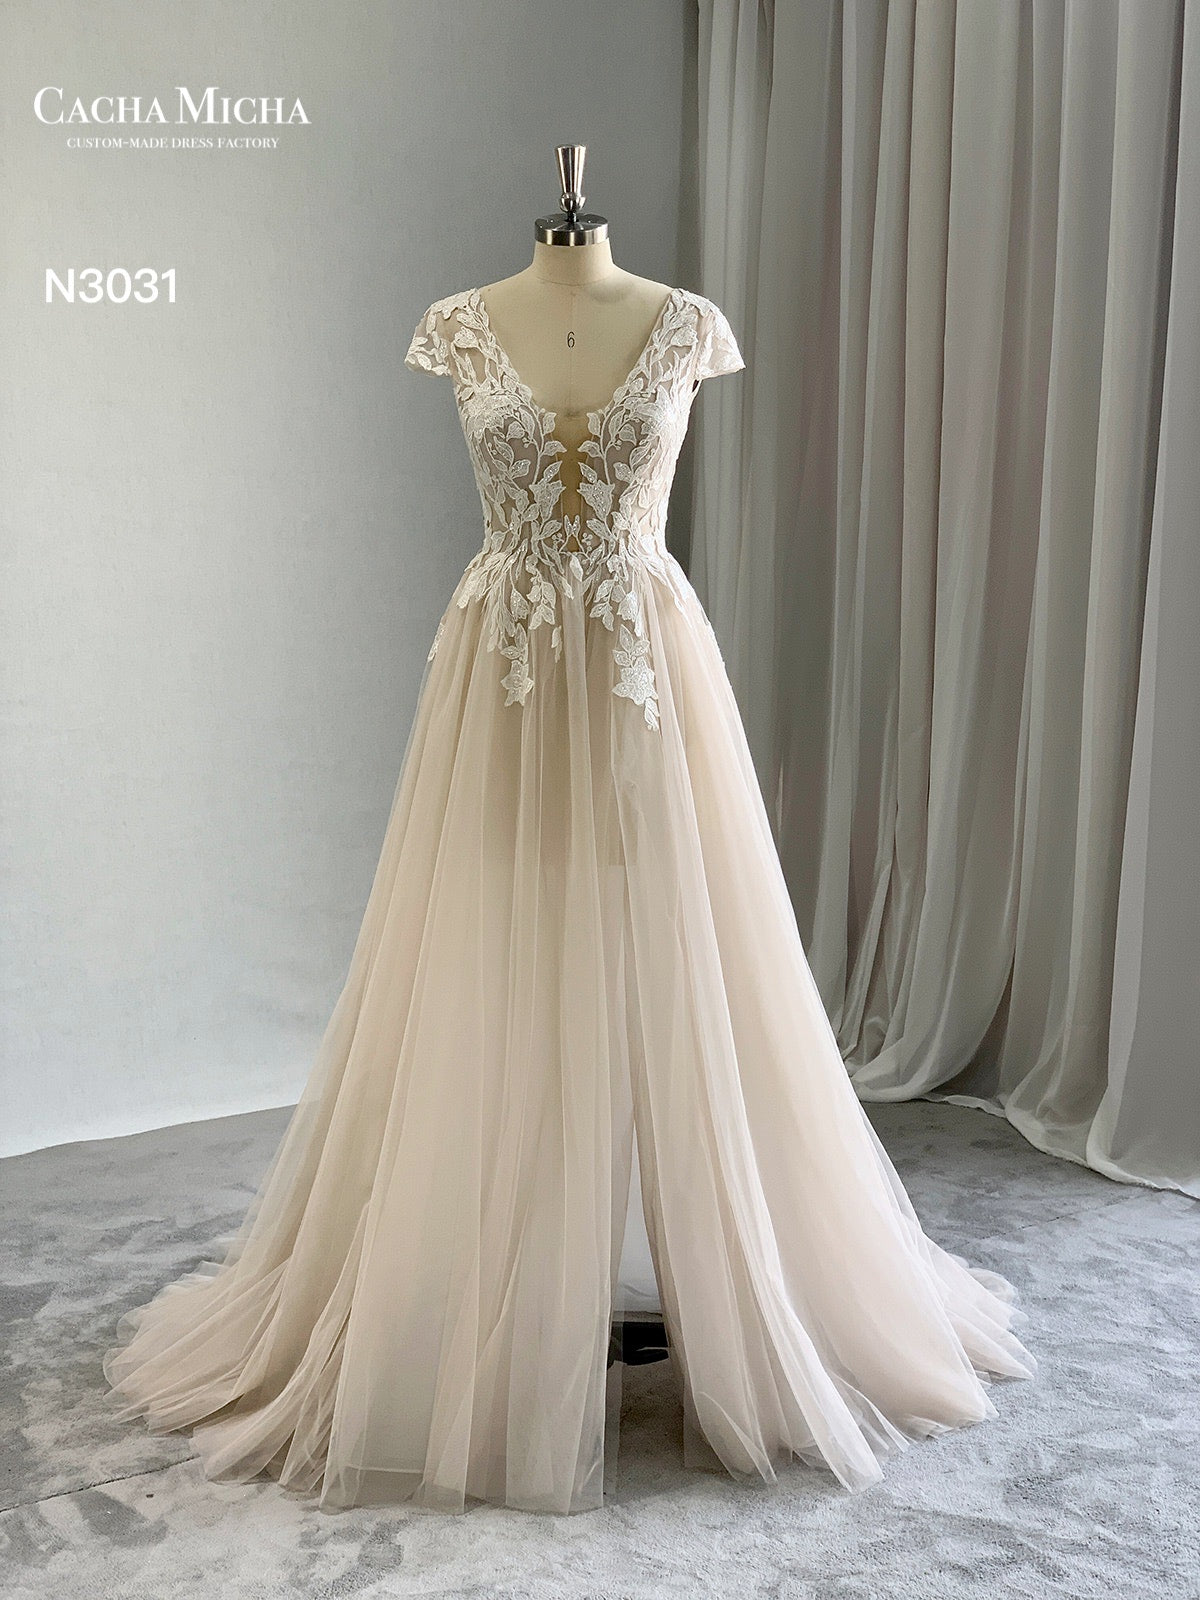 Cap Sleeves Lace Backless Side Slit Champagne Wedding Dress N3031